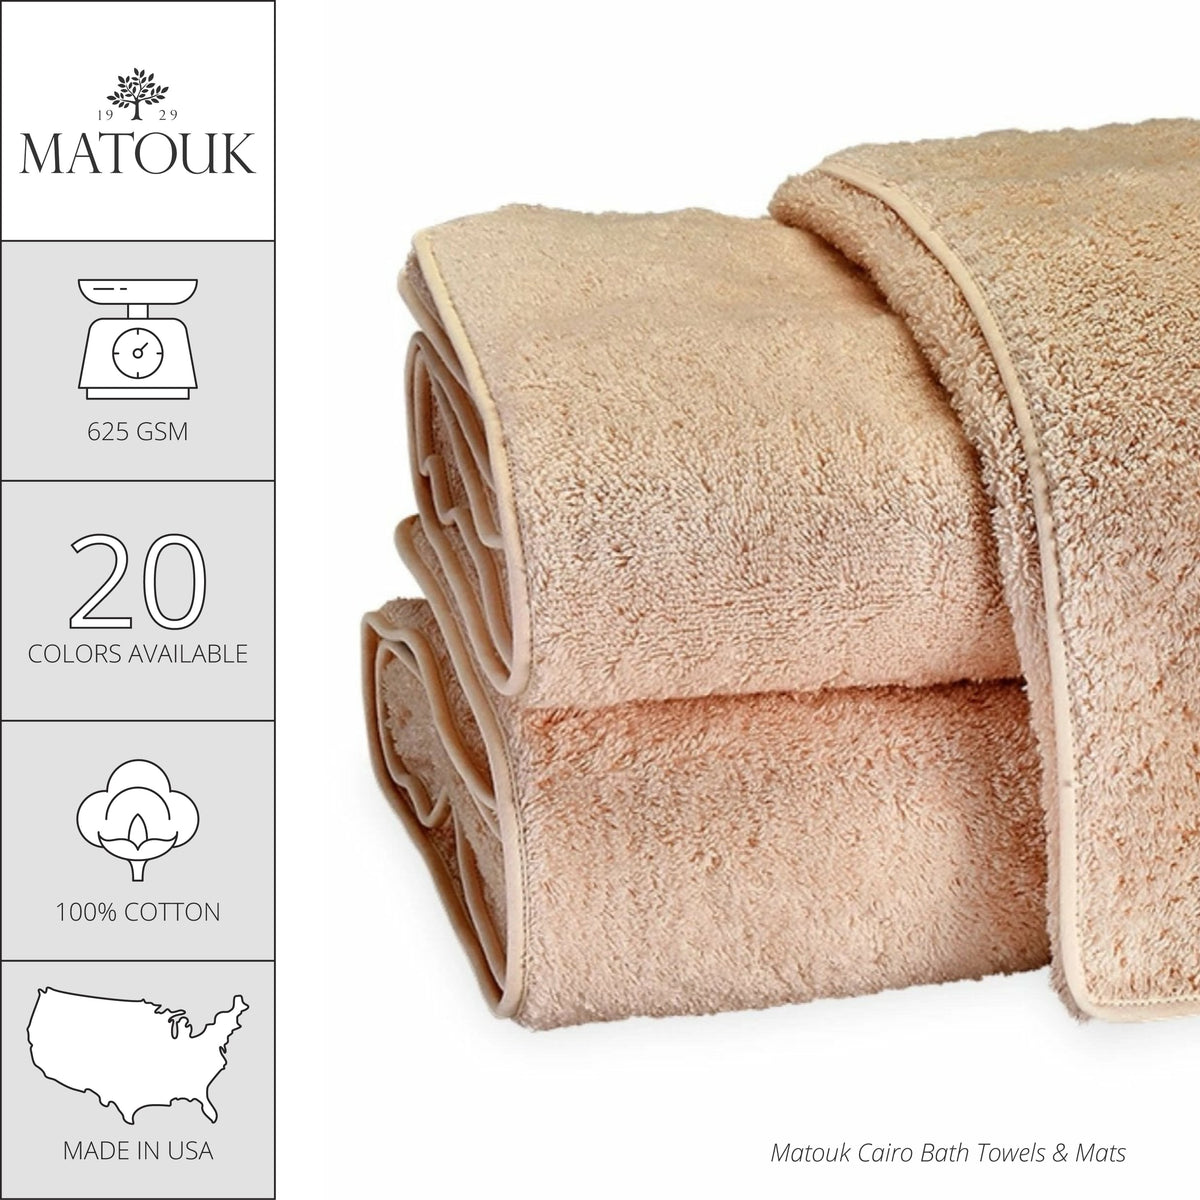 Matouk Cairo Scallop Bath Towels and Mats - Palm